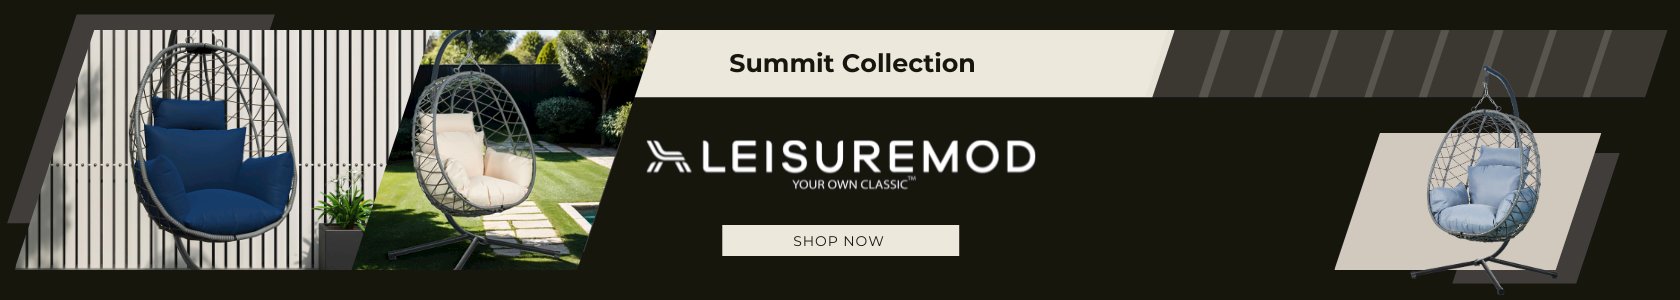 Summit Collection by Leisuremod banner